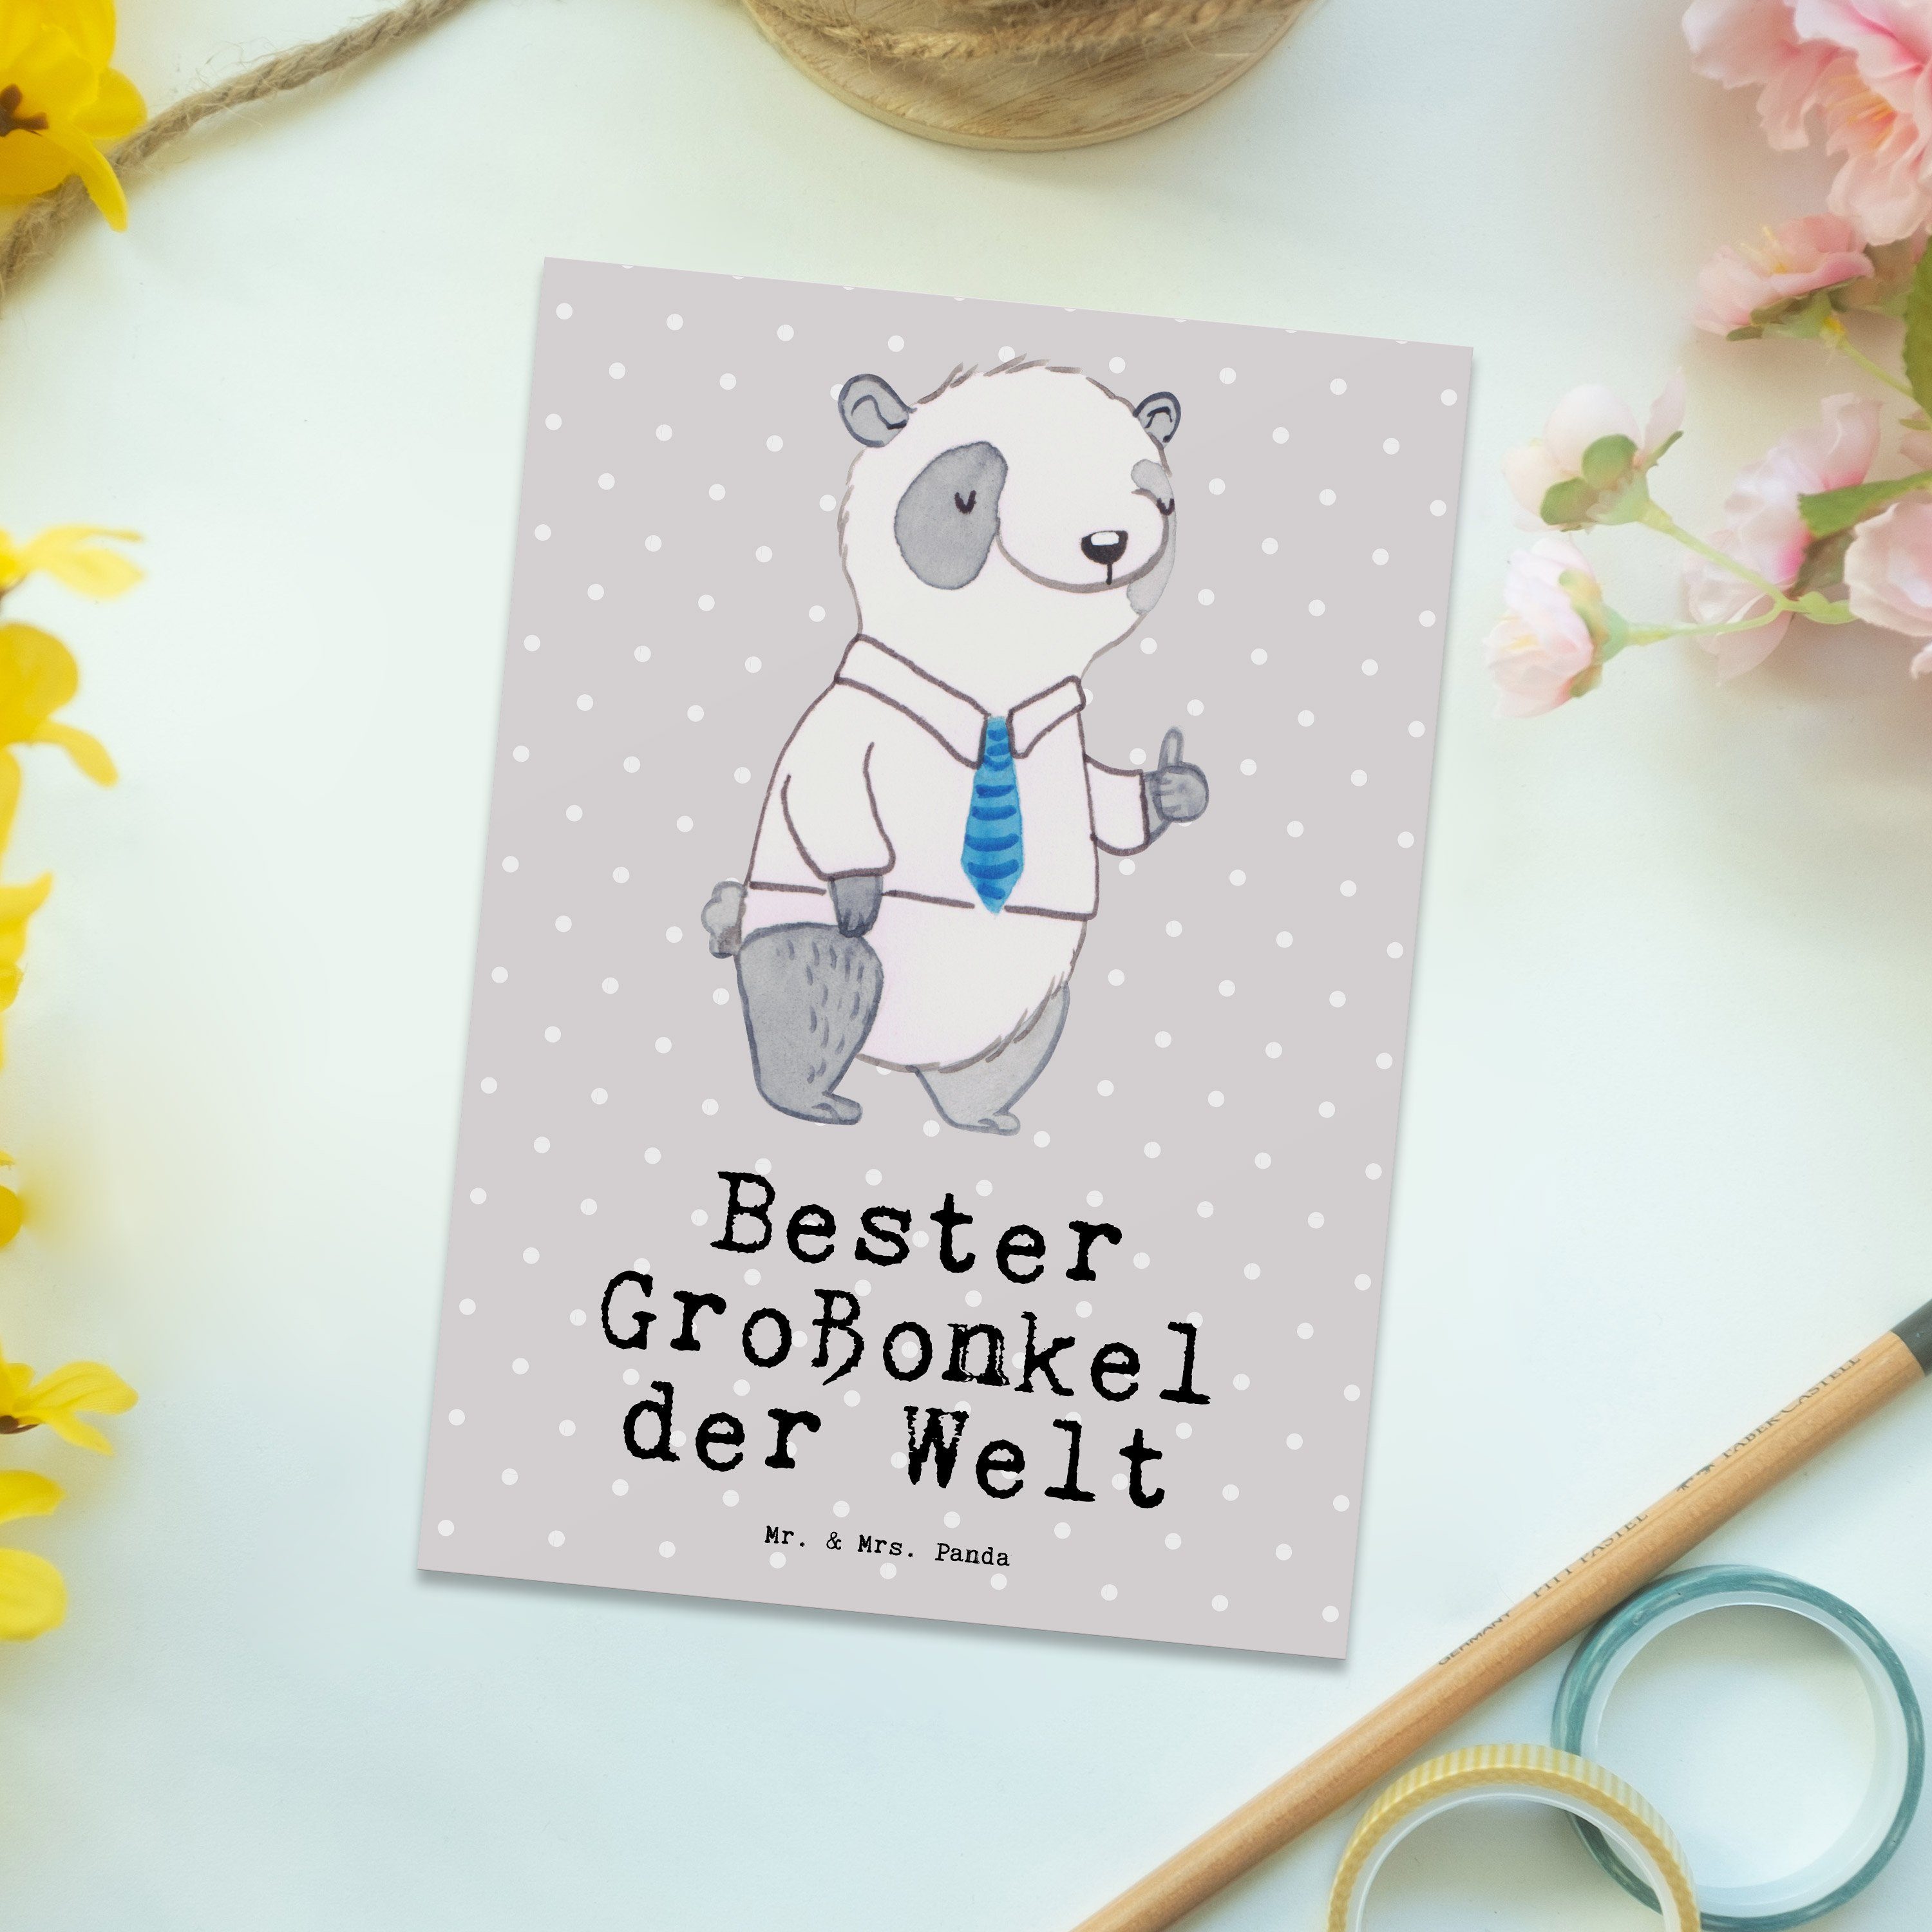 Mr. & Mrs. Panda Panda Grau Postkarte Einladungs Großonkel Bester Pastell Welt - Geschenk, der 